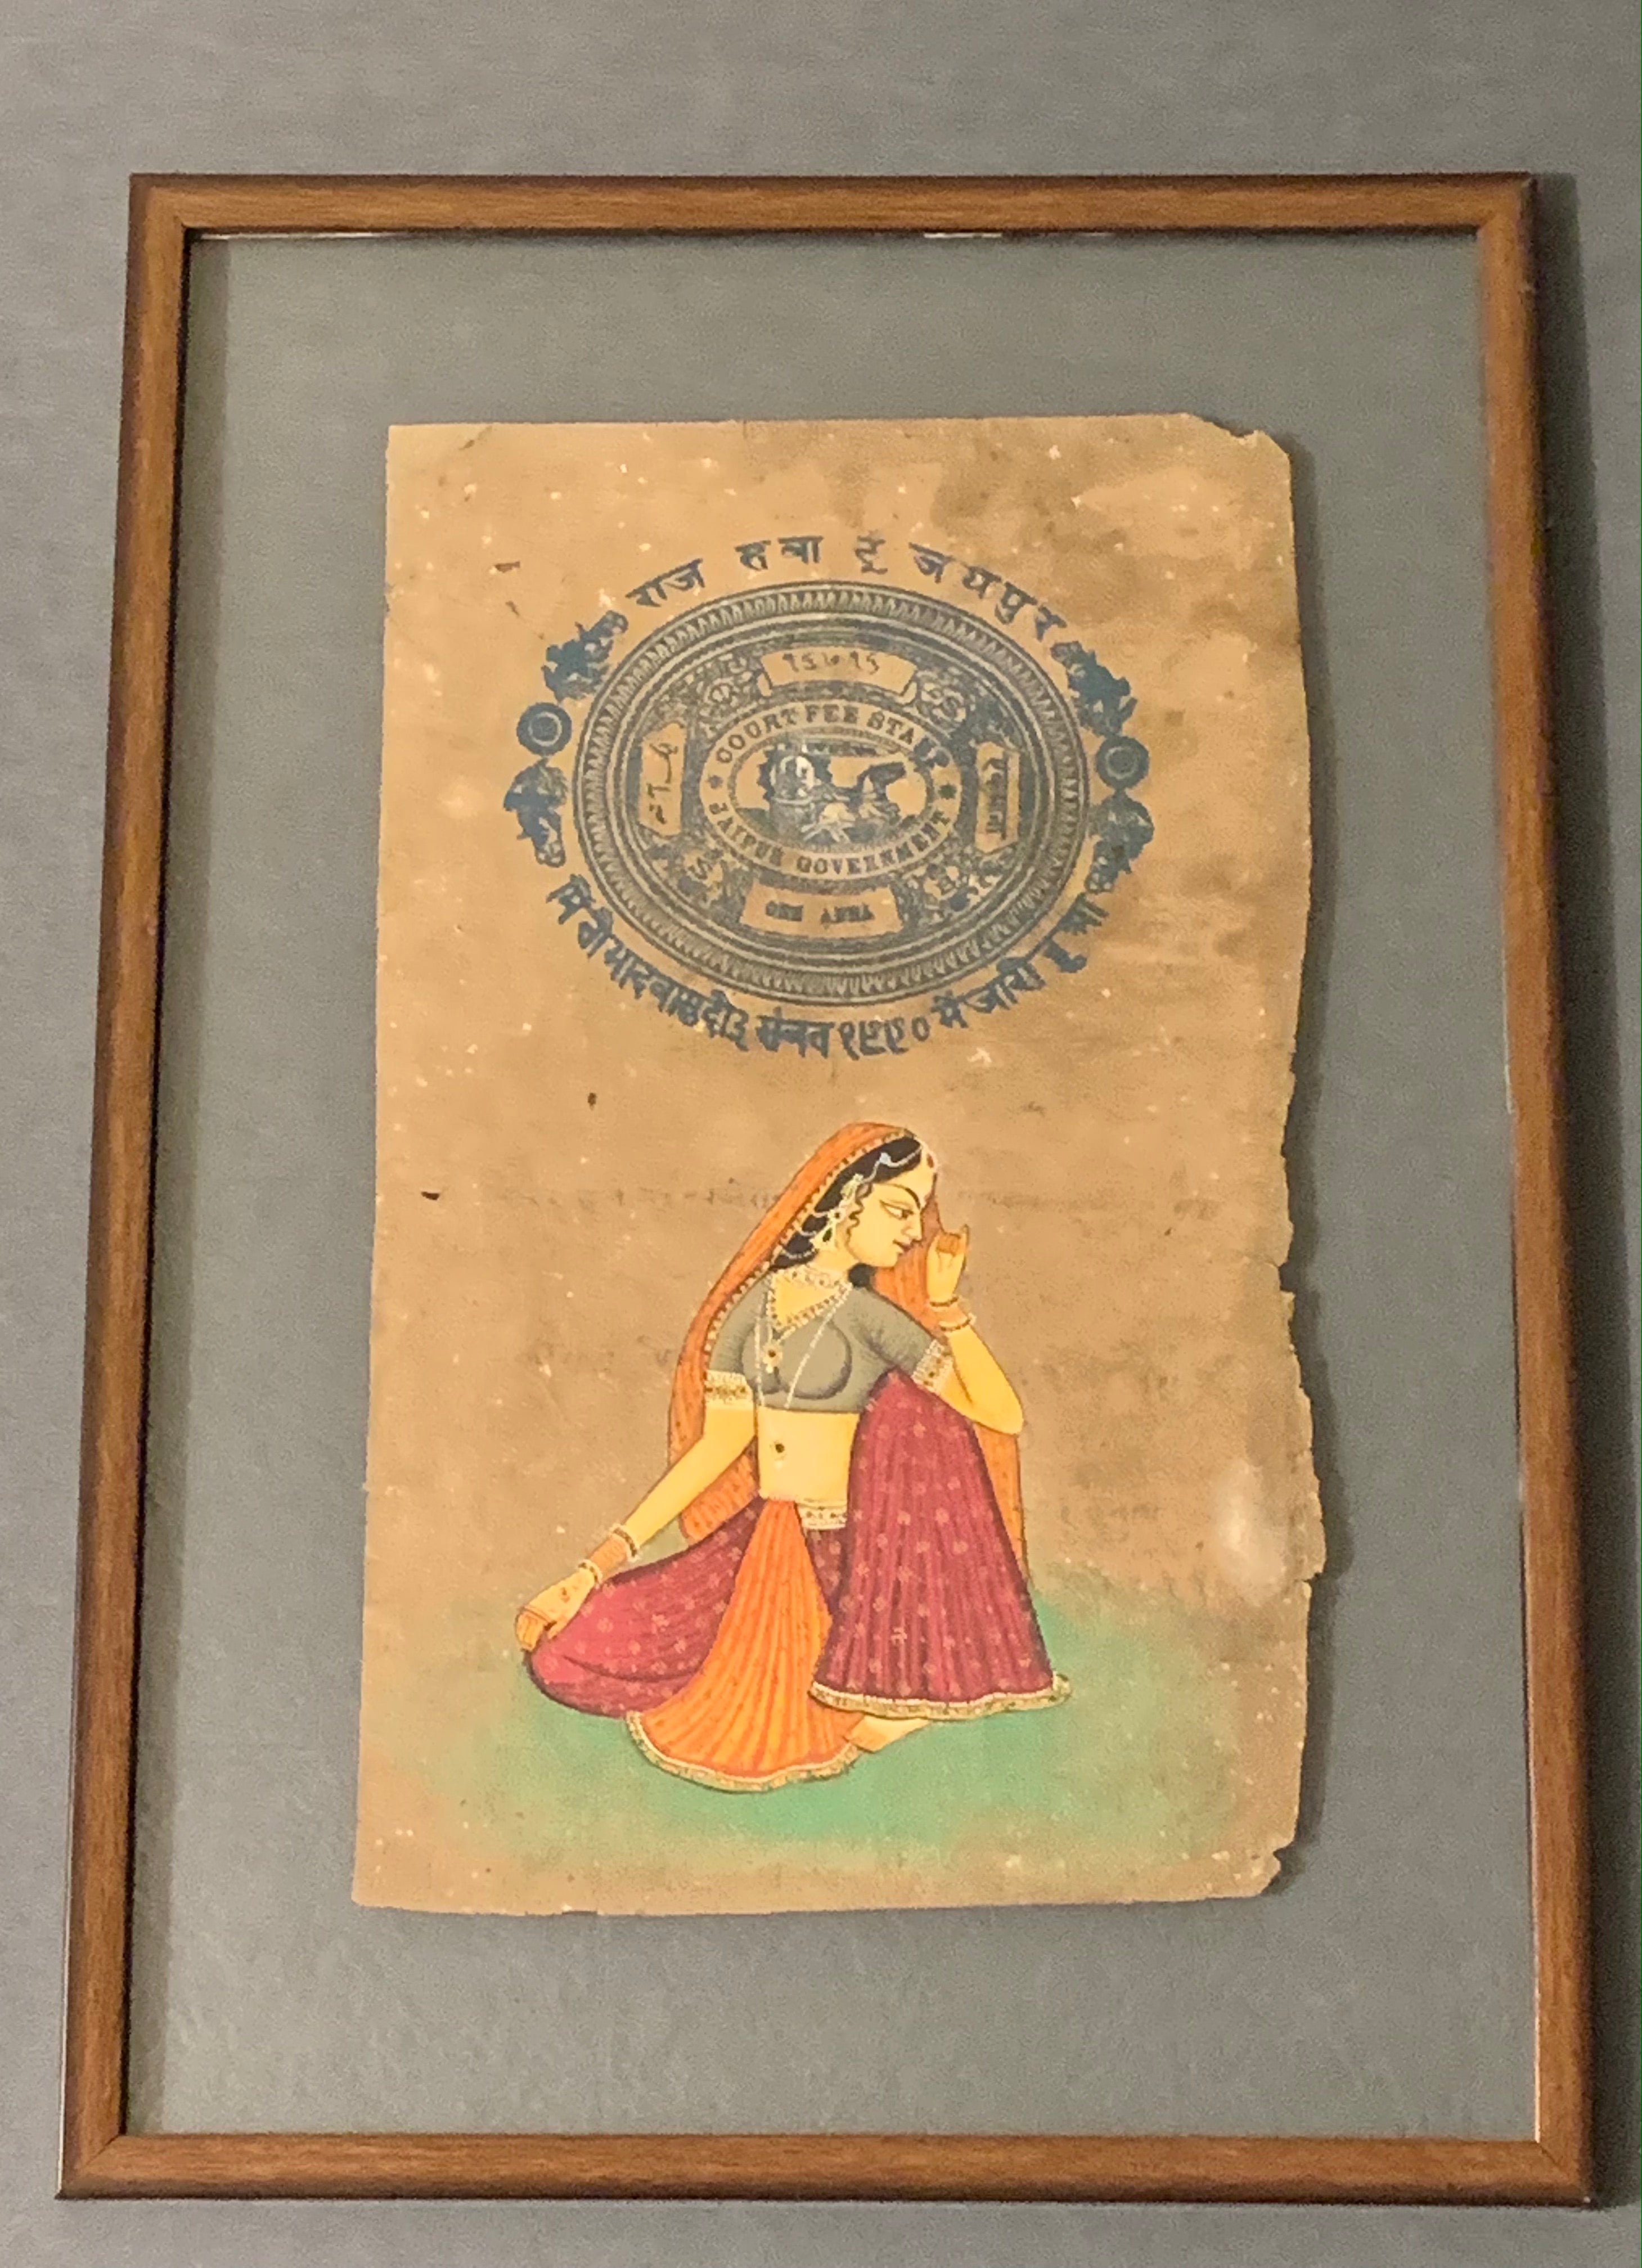 Framed Art; on Vintage Court Fee Stamp Paper (Jaipur Government) Rajasthan, India.